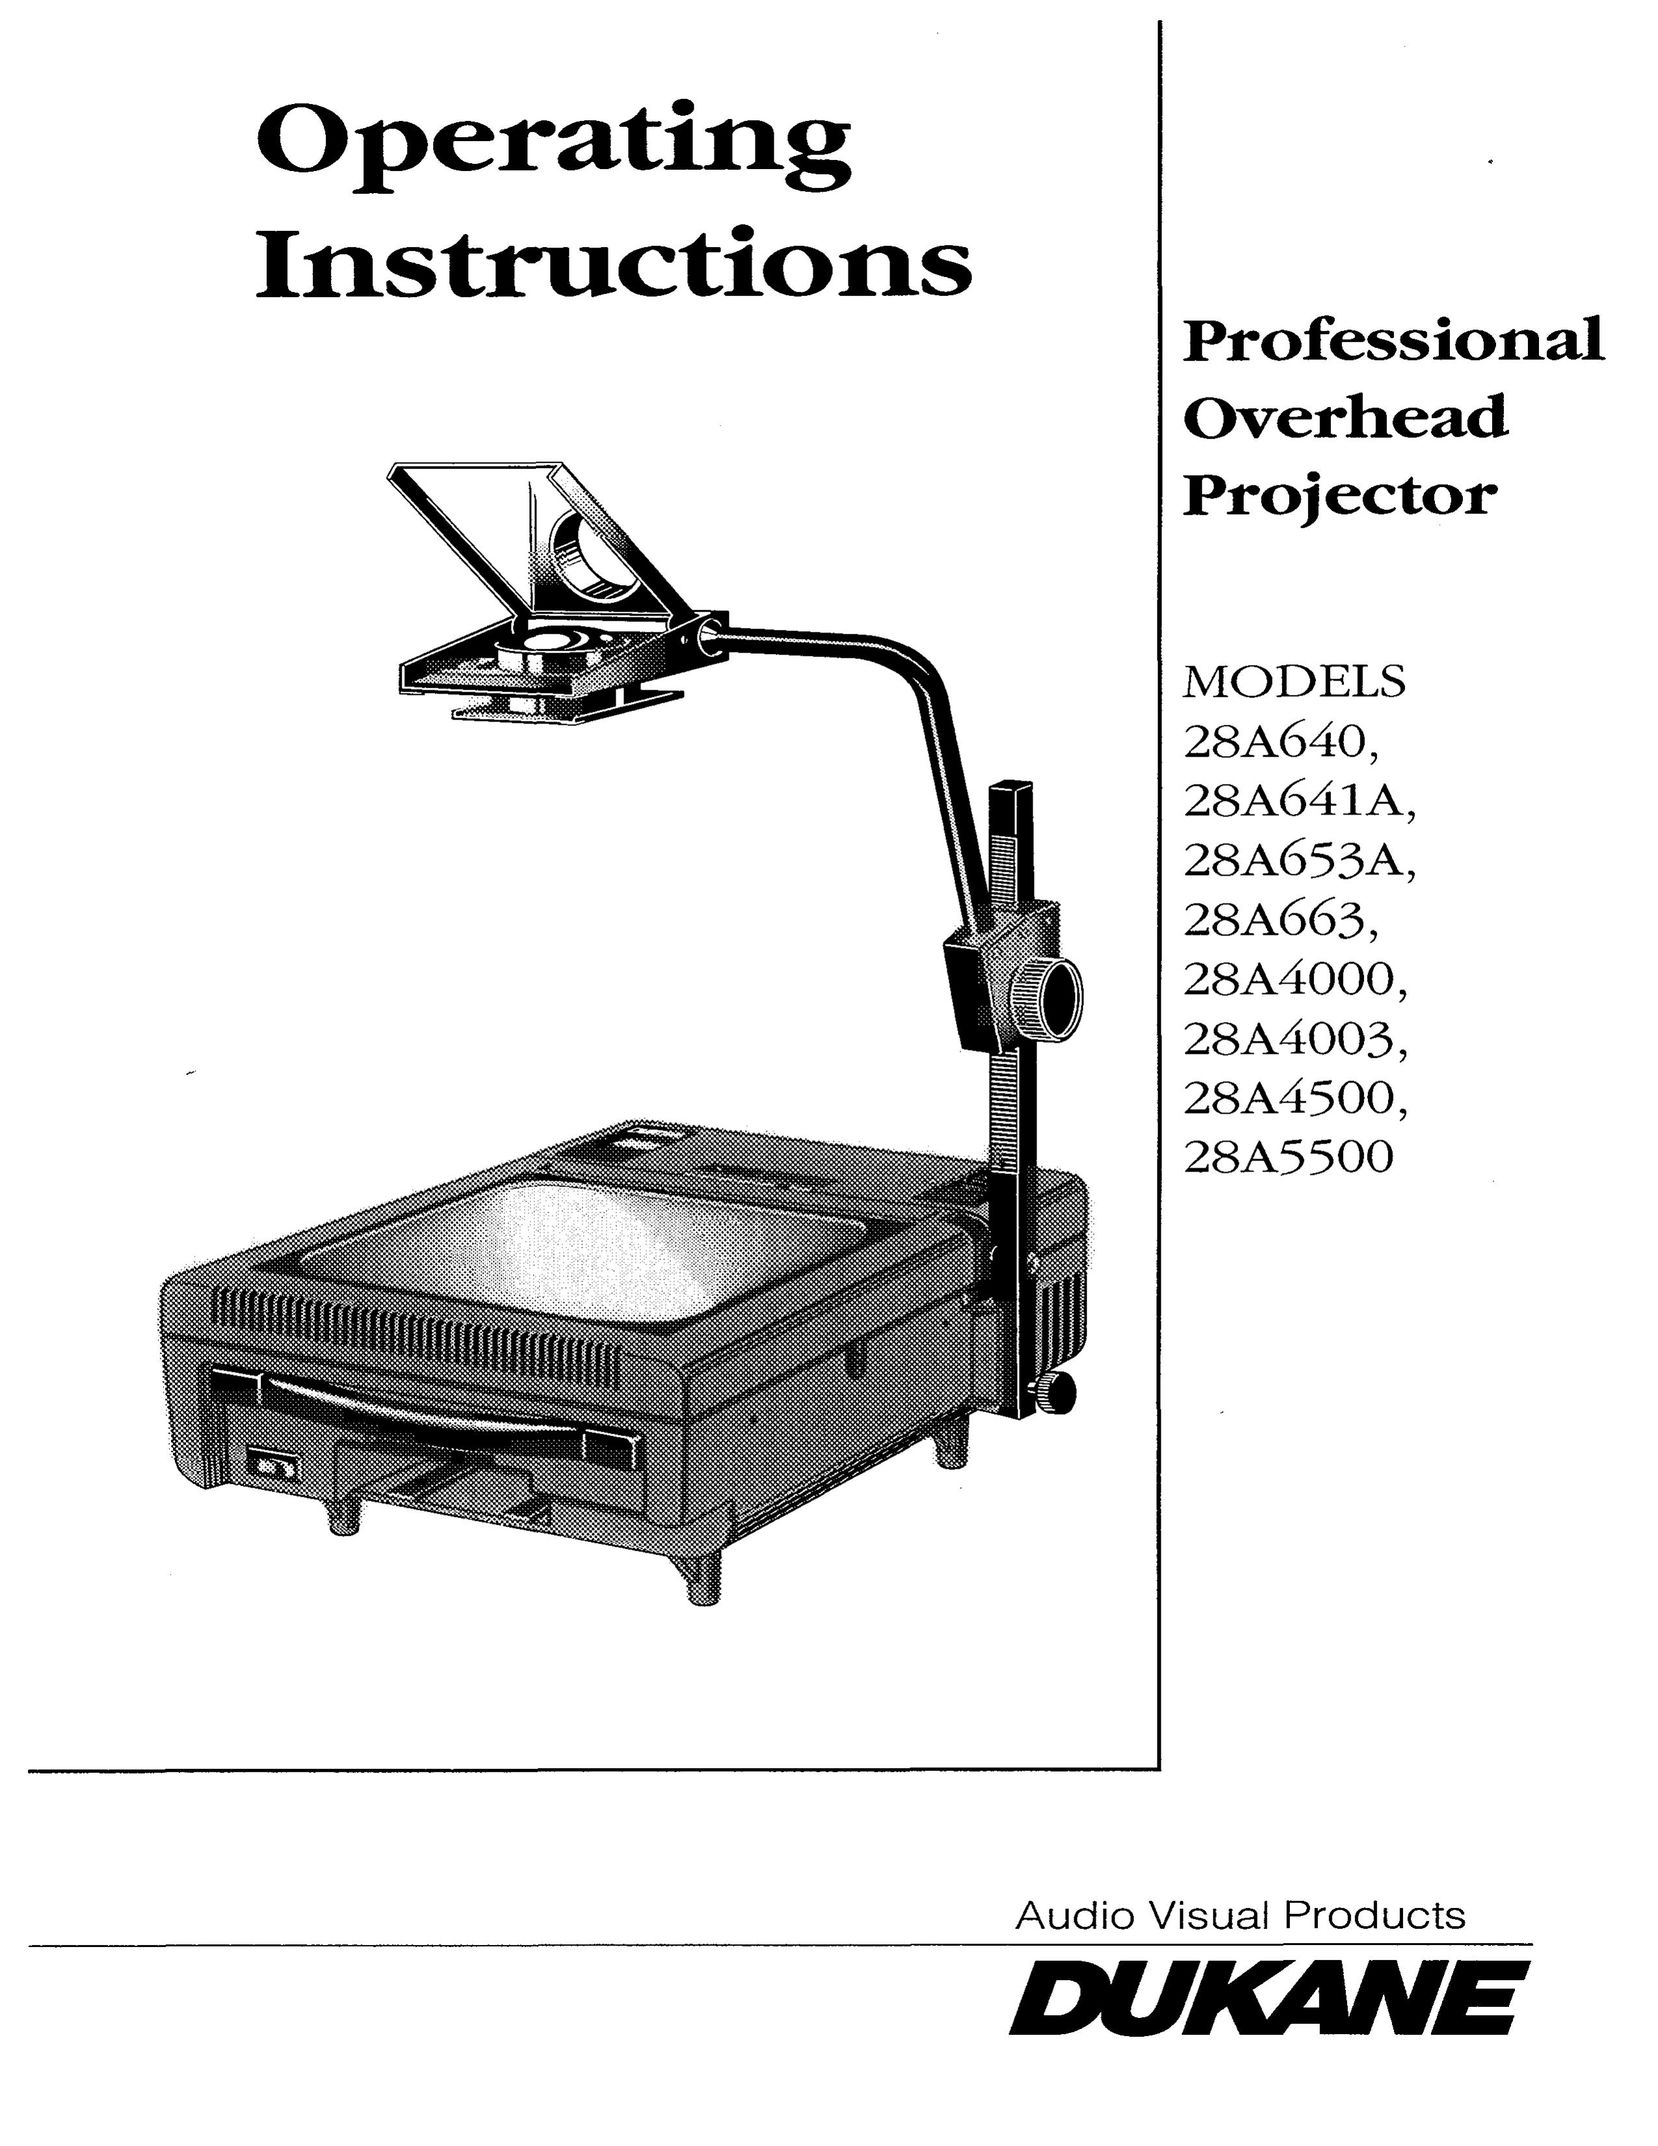 Dukane 28A4000 Projector User Manual